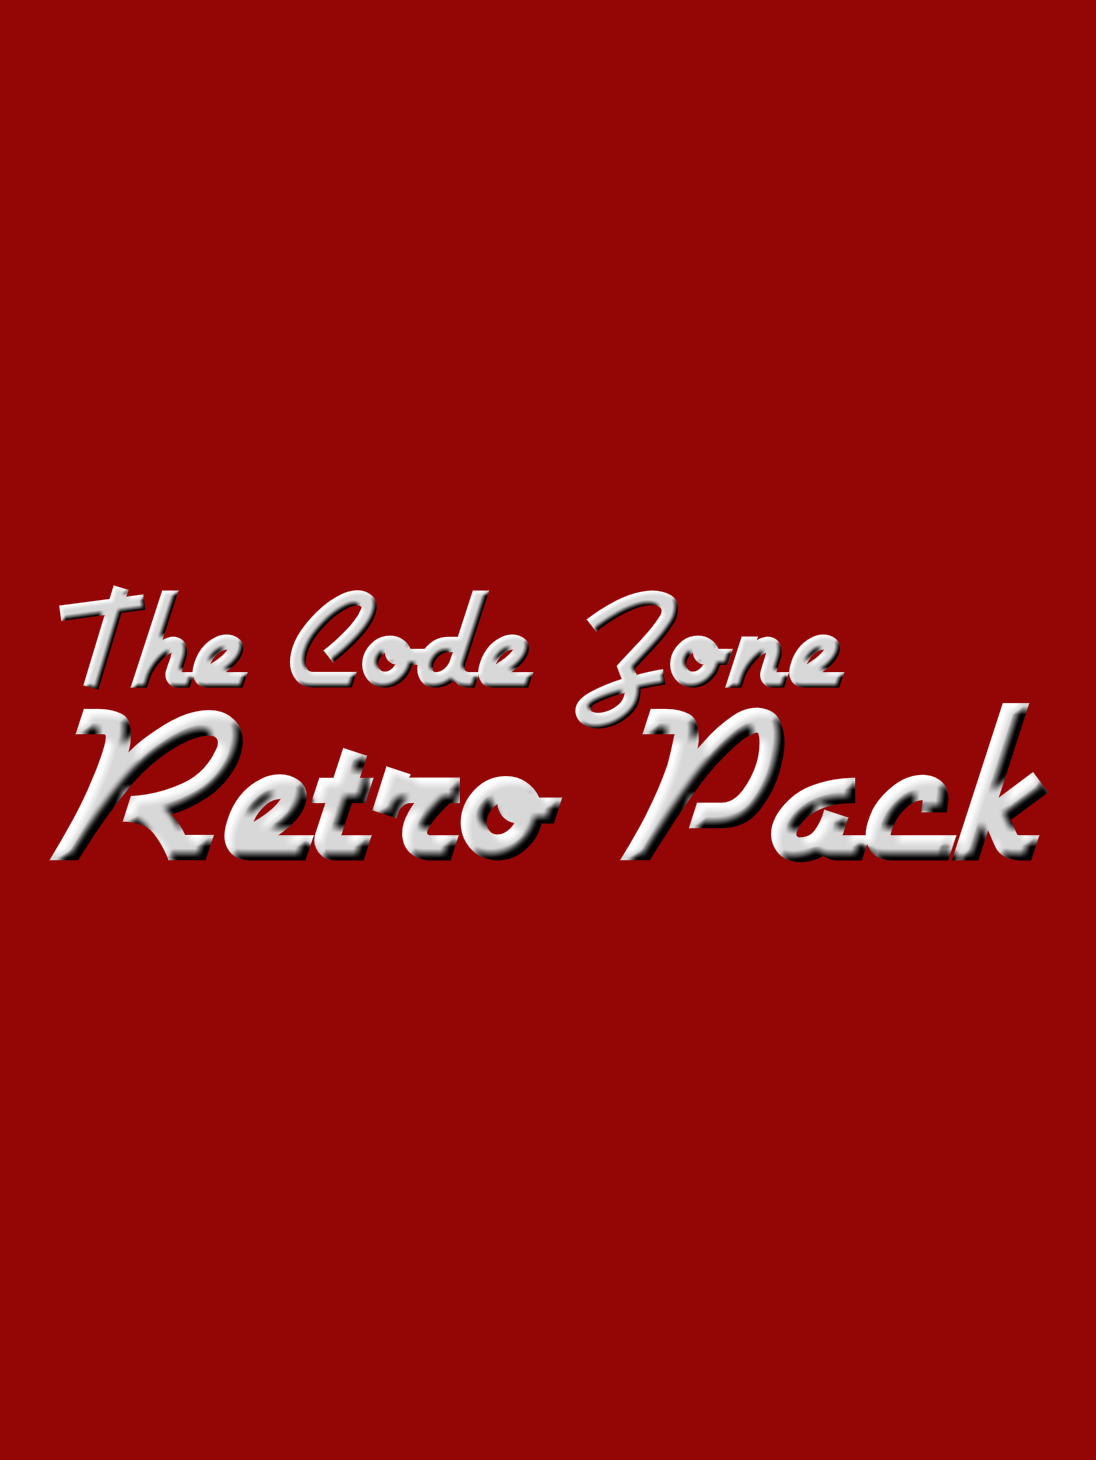 The Code Zone - The Code Zone Retro Pack